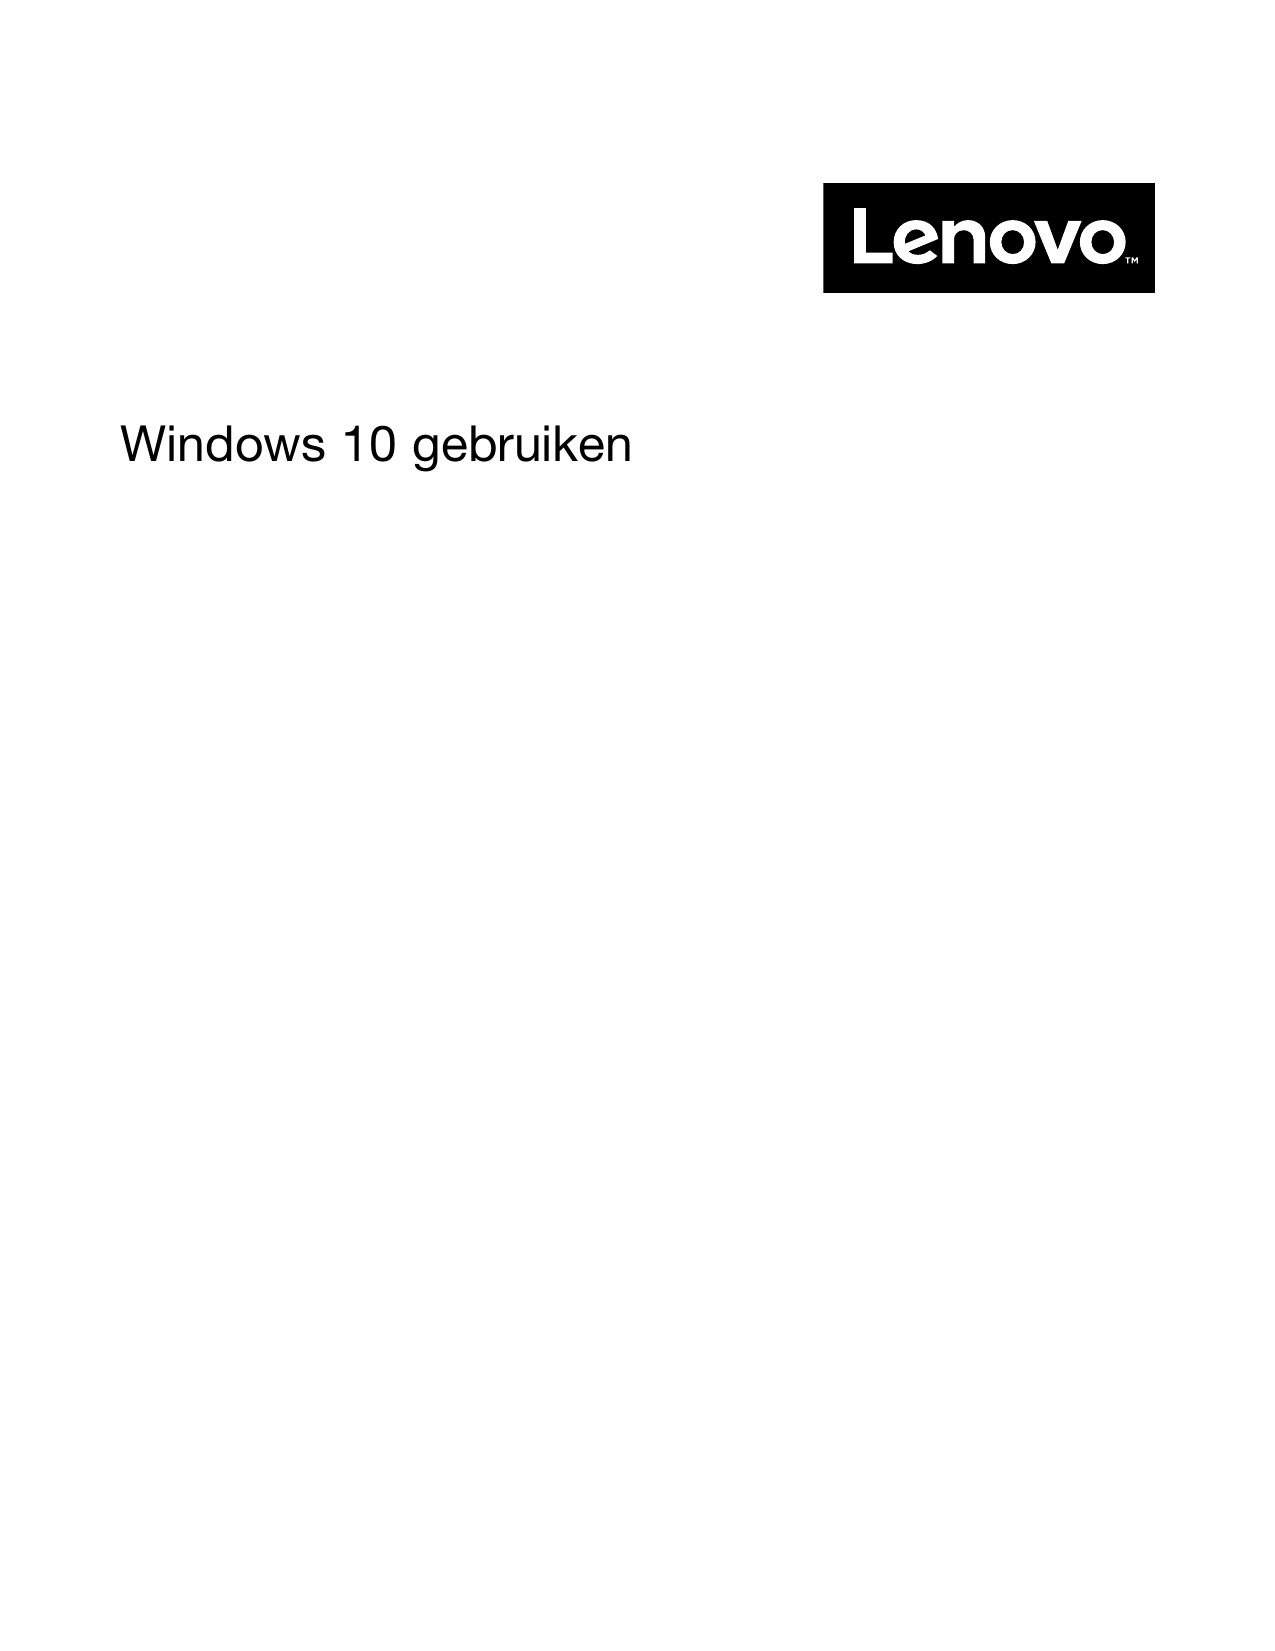 Victor Malaise vasthouden Lenovo Lnb Win10 Qsg Nl User Manual (Dutch) Windows 10 Quick Start Guide  Idea Pads, Notebooks G50 80 Laptop (Lenovo) Type 20371